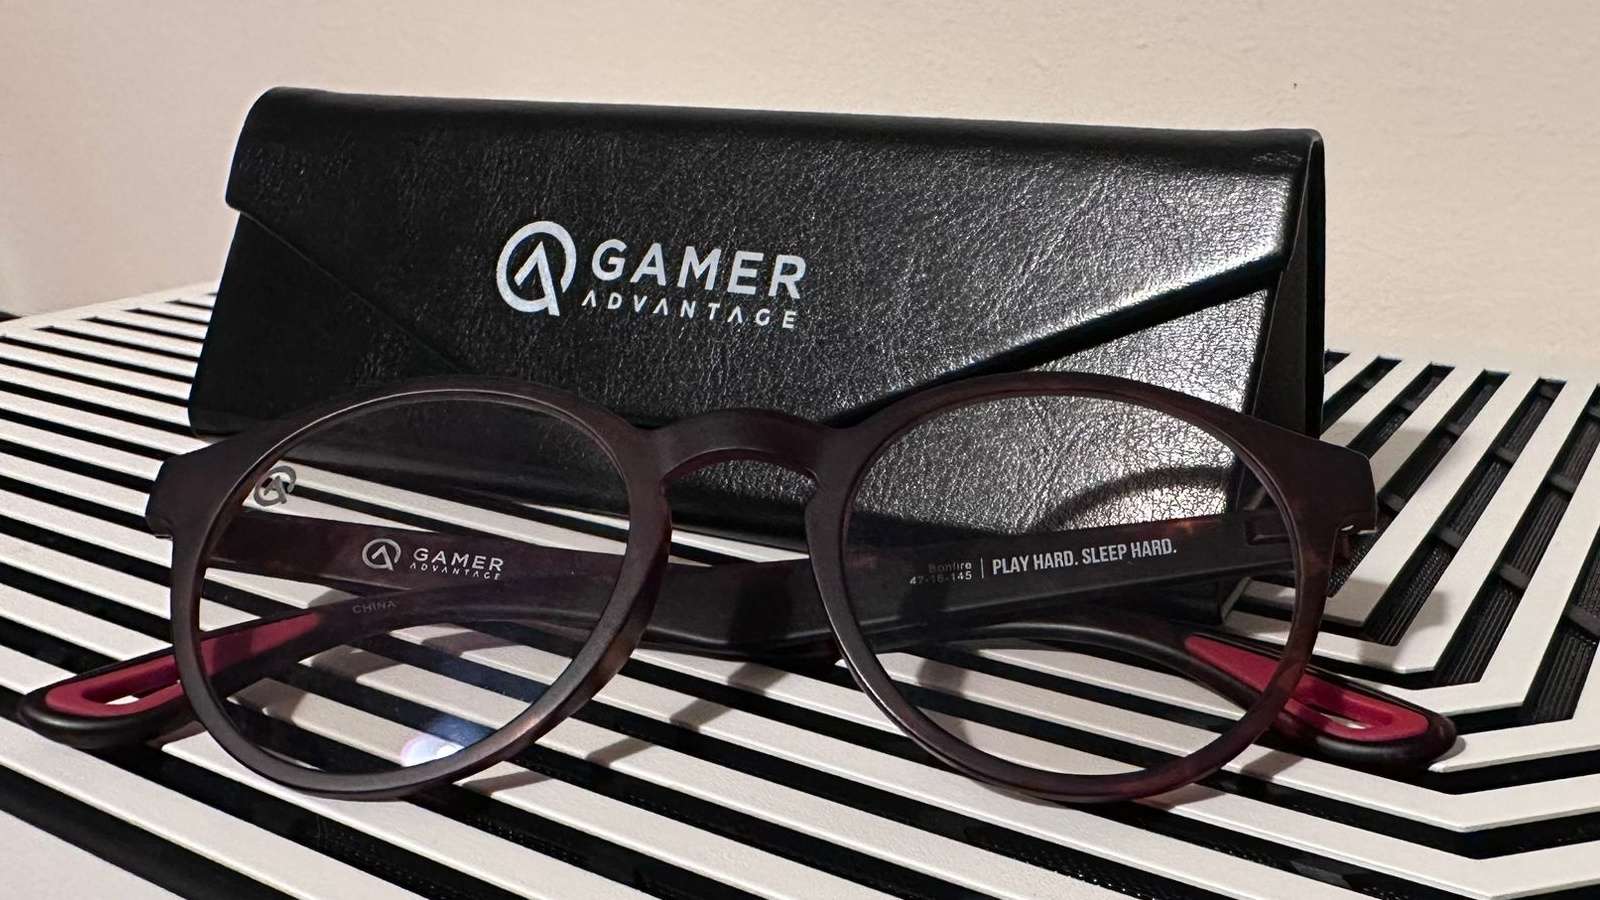 Gamer Advantage glasses and case